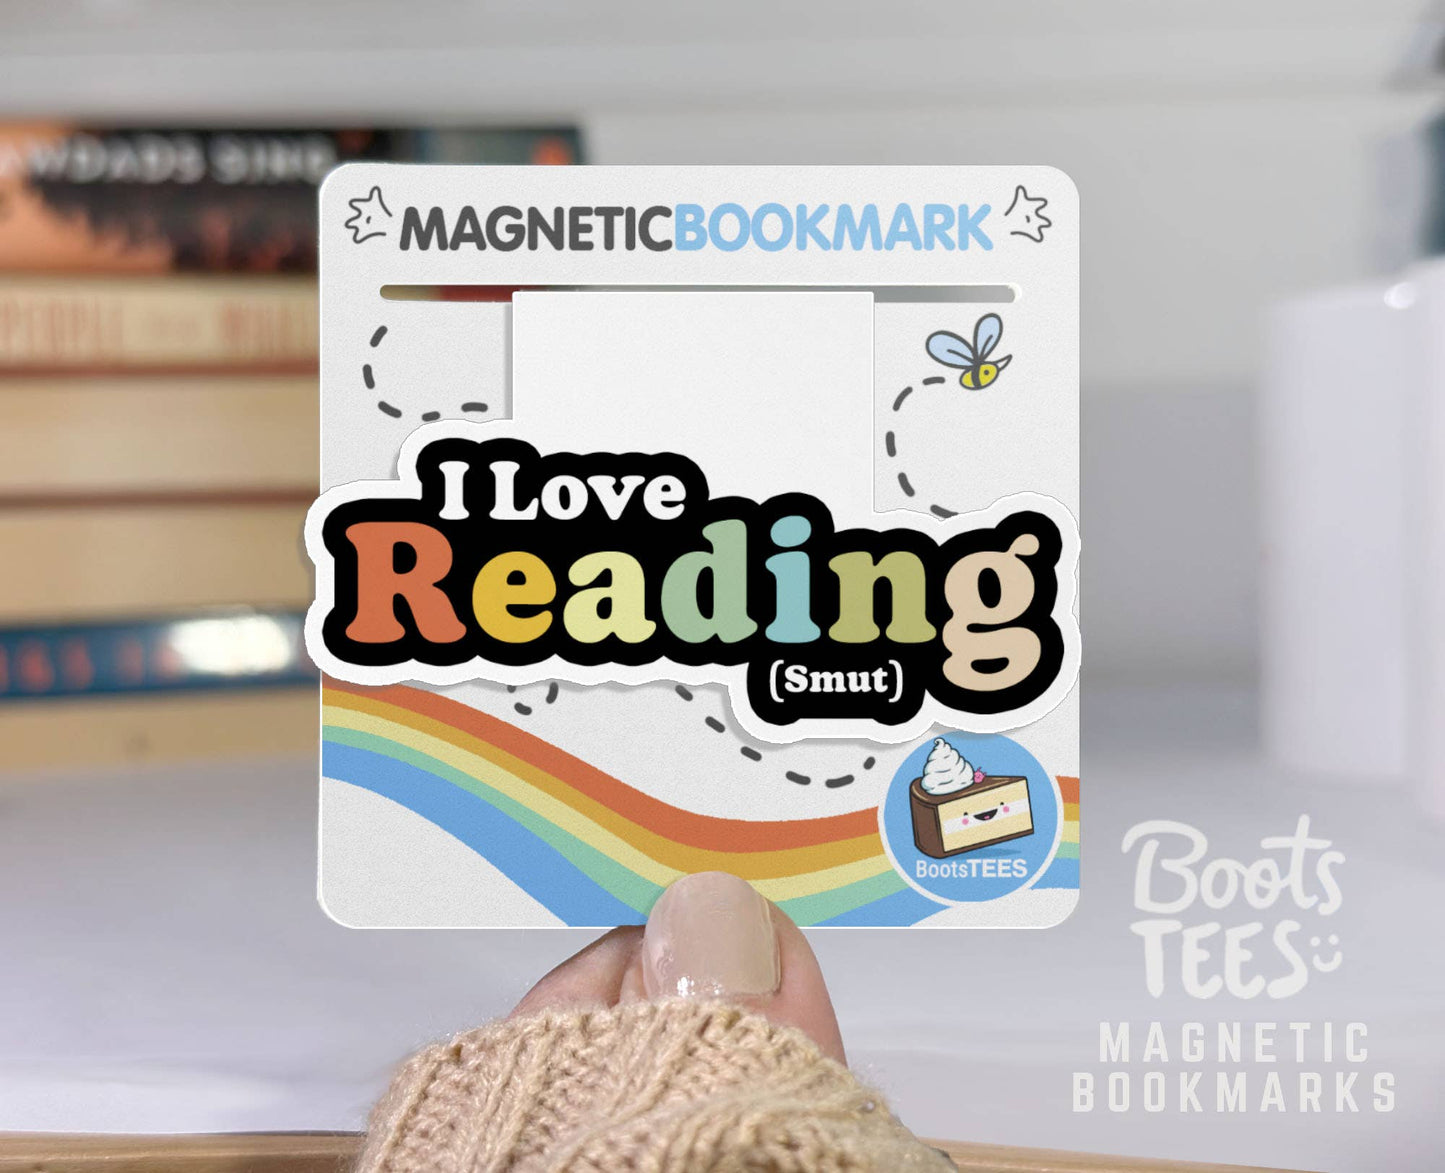 Bookmark: I Love Reading Smut (Magnetic)